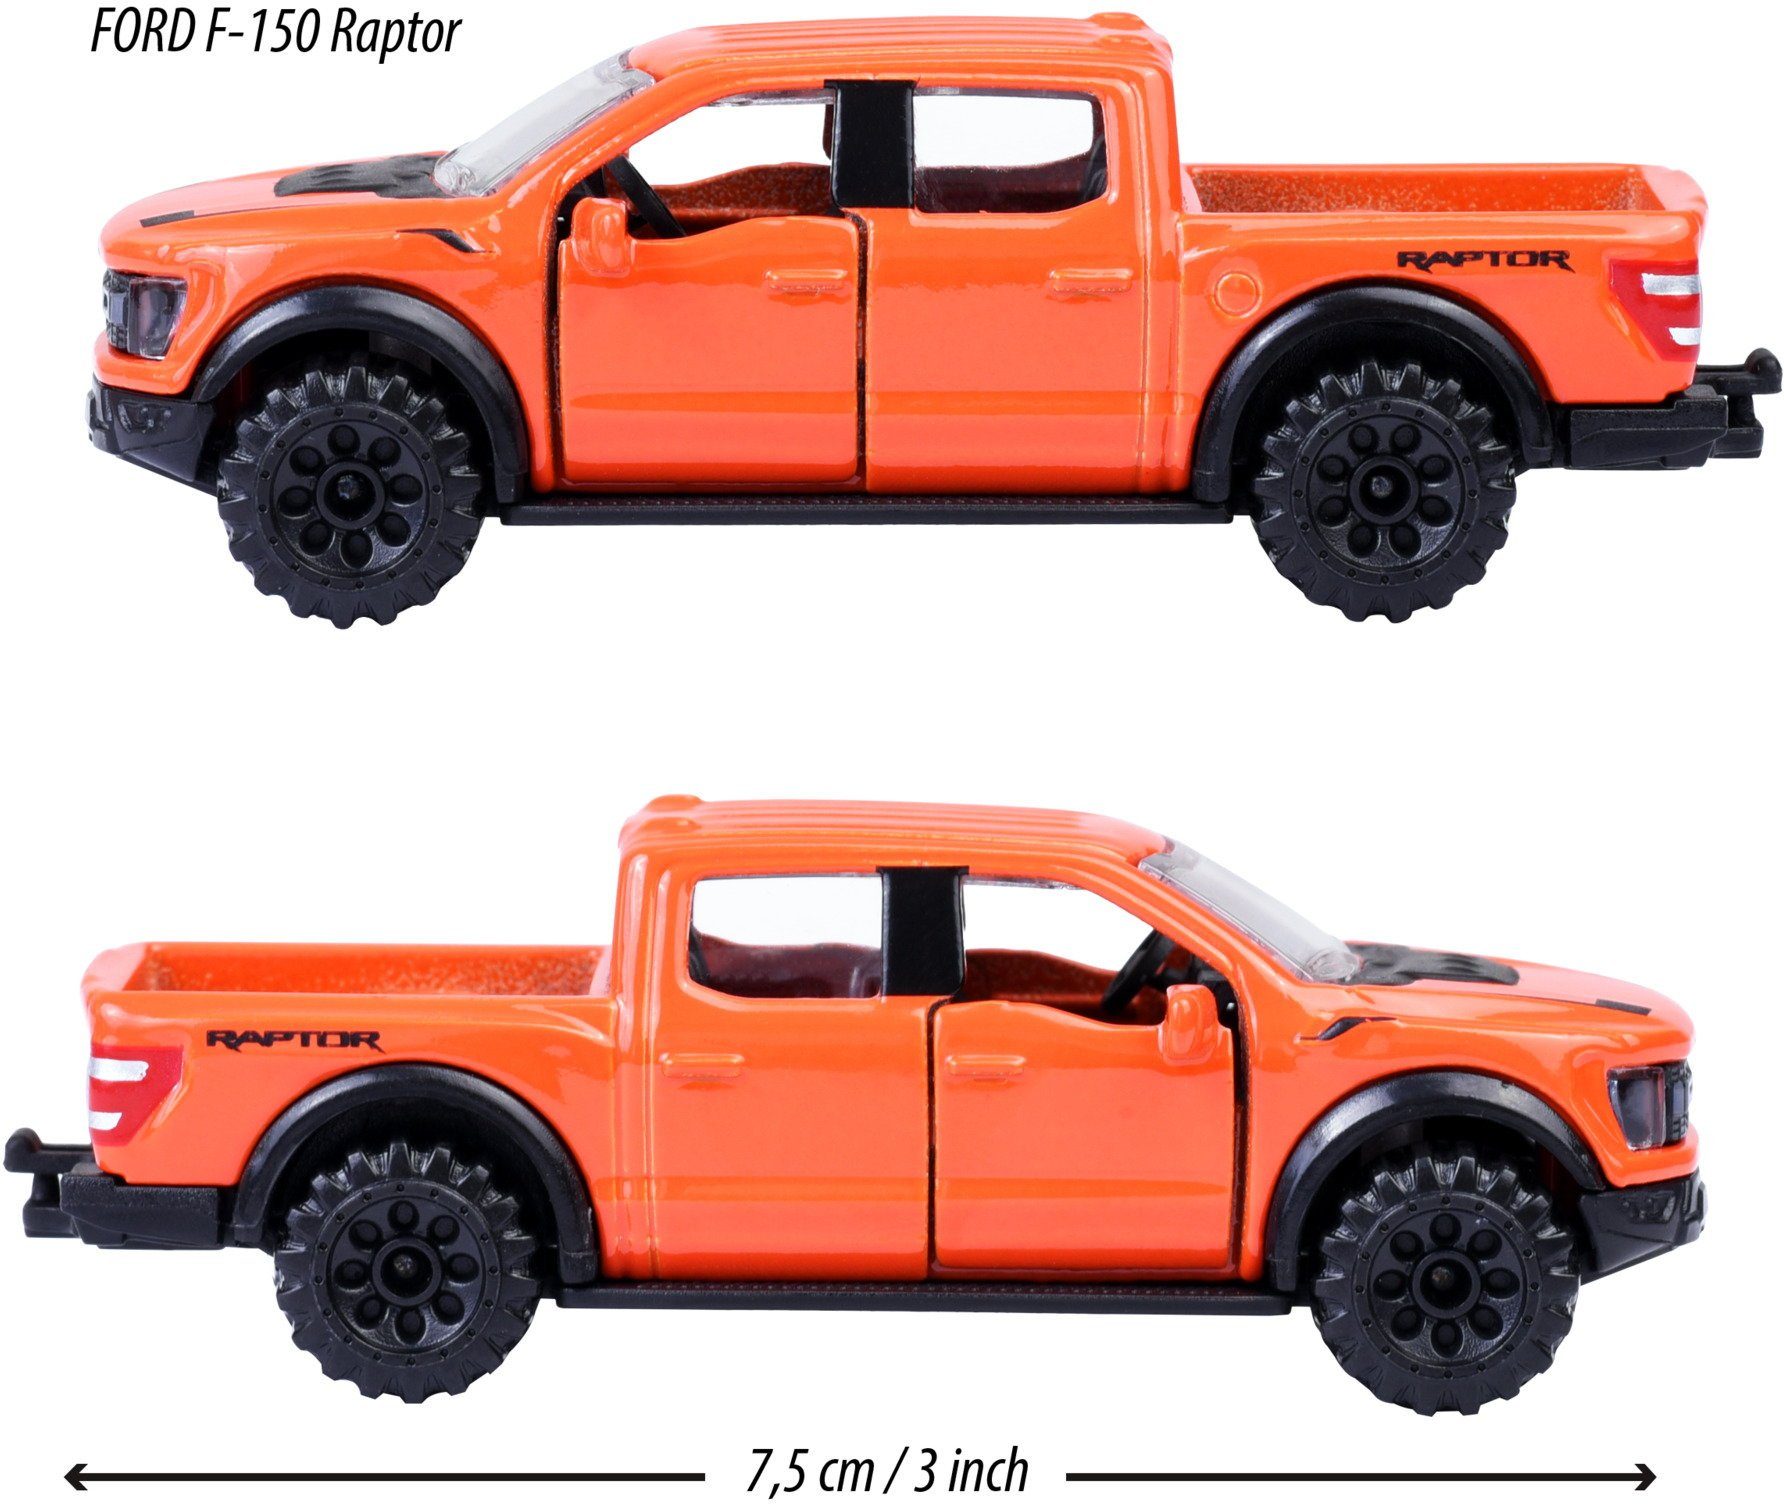 F-150 Spielzeugauto 212053052Q39 Ford Raptor Premium majORETTE orange Cars Spielzeug-Auto